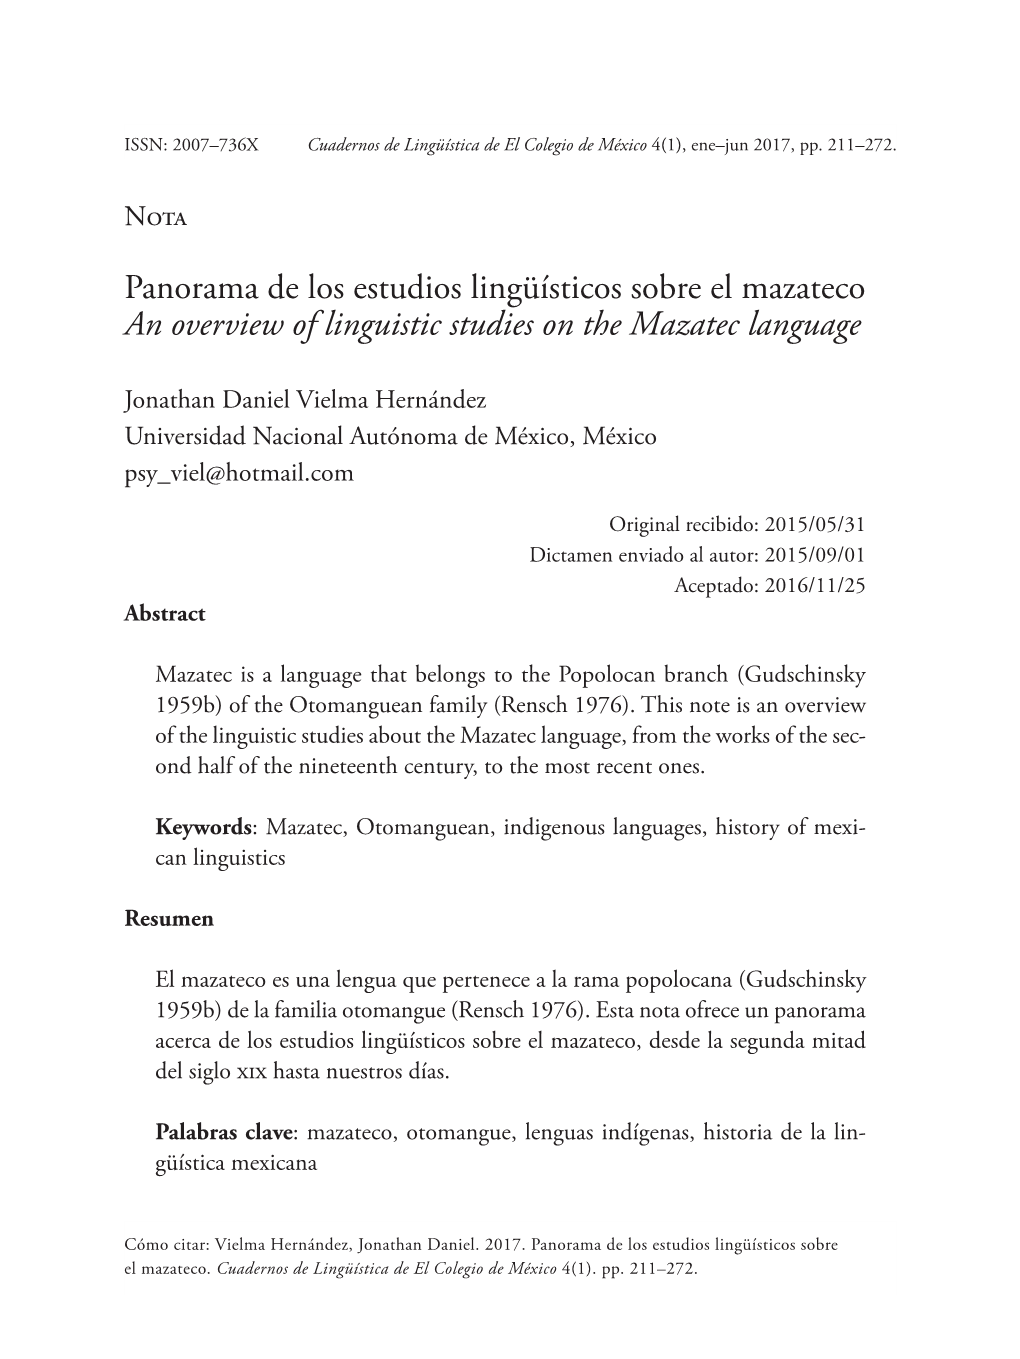 Panorama De Los Estudios Lingüísticos Sobre El Mazateco an Overview of Linguistic Studies on the Mazatec Language